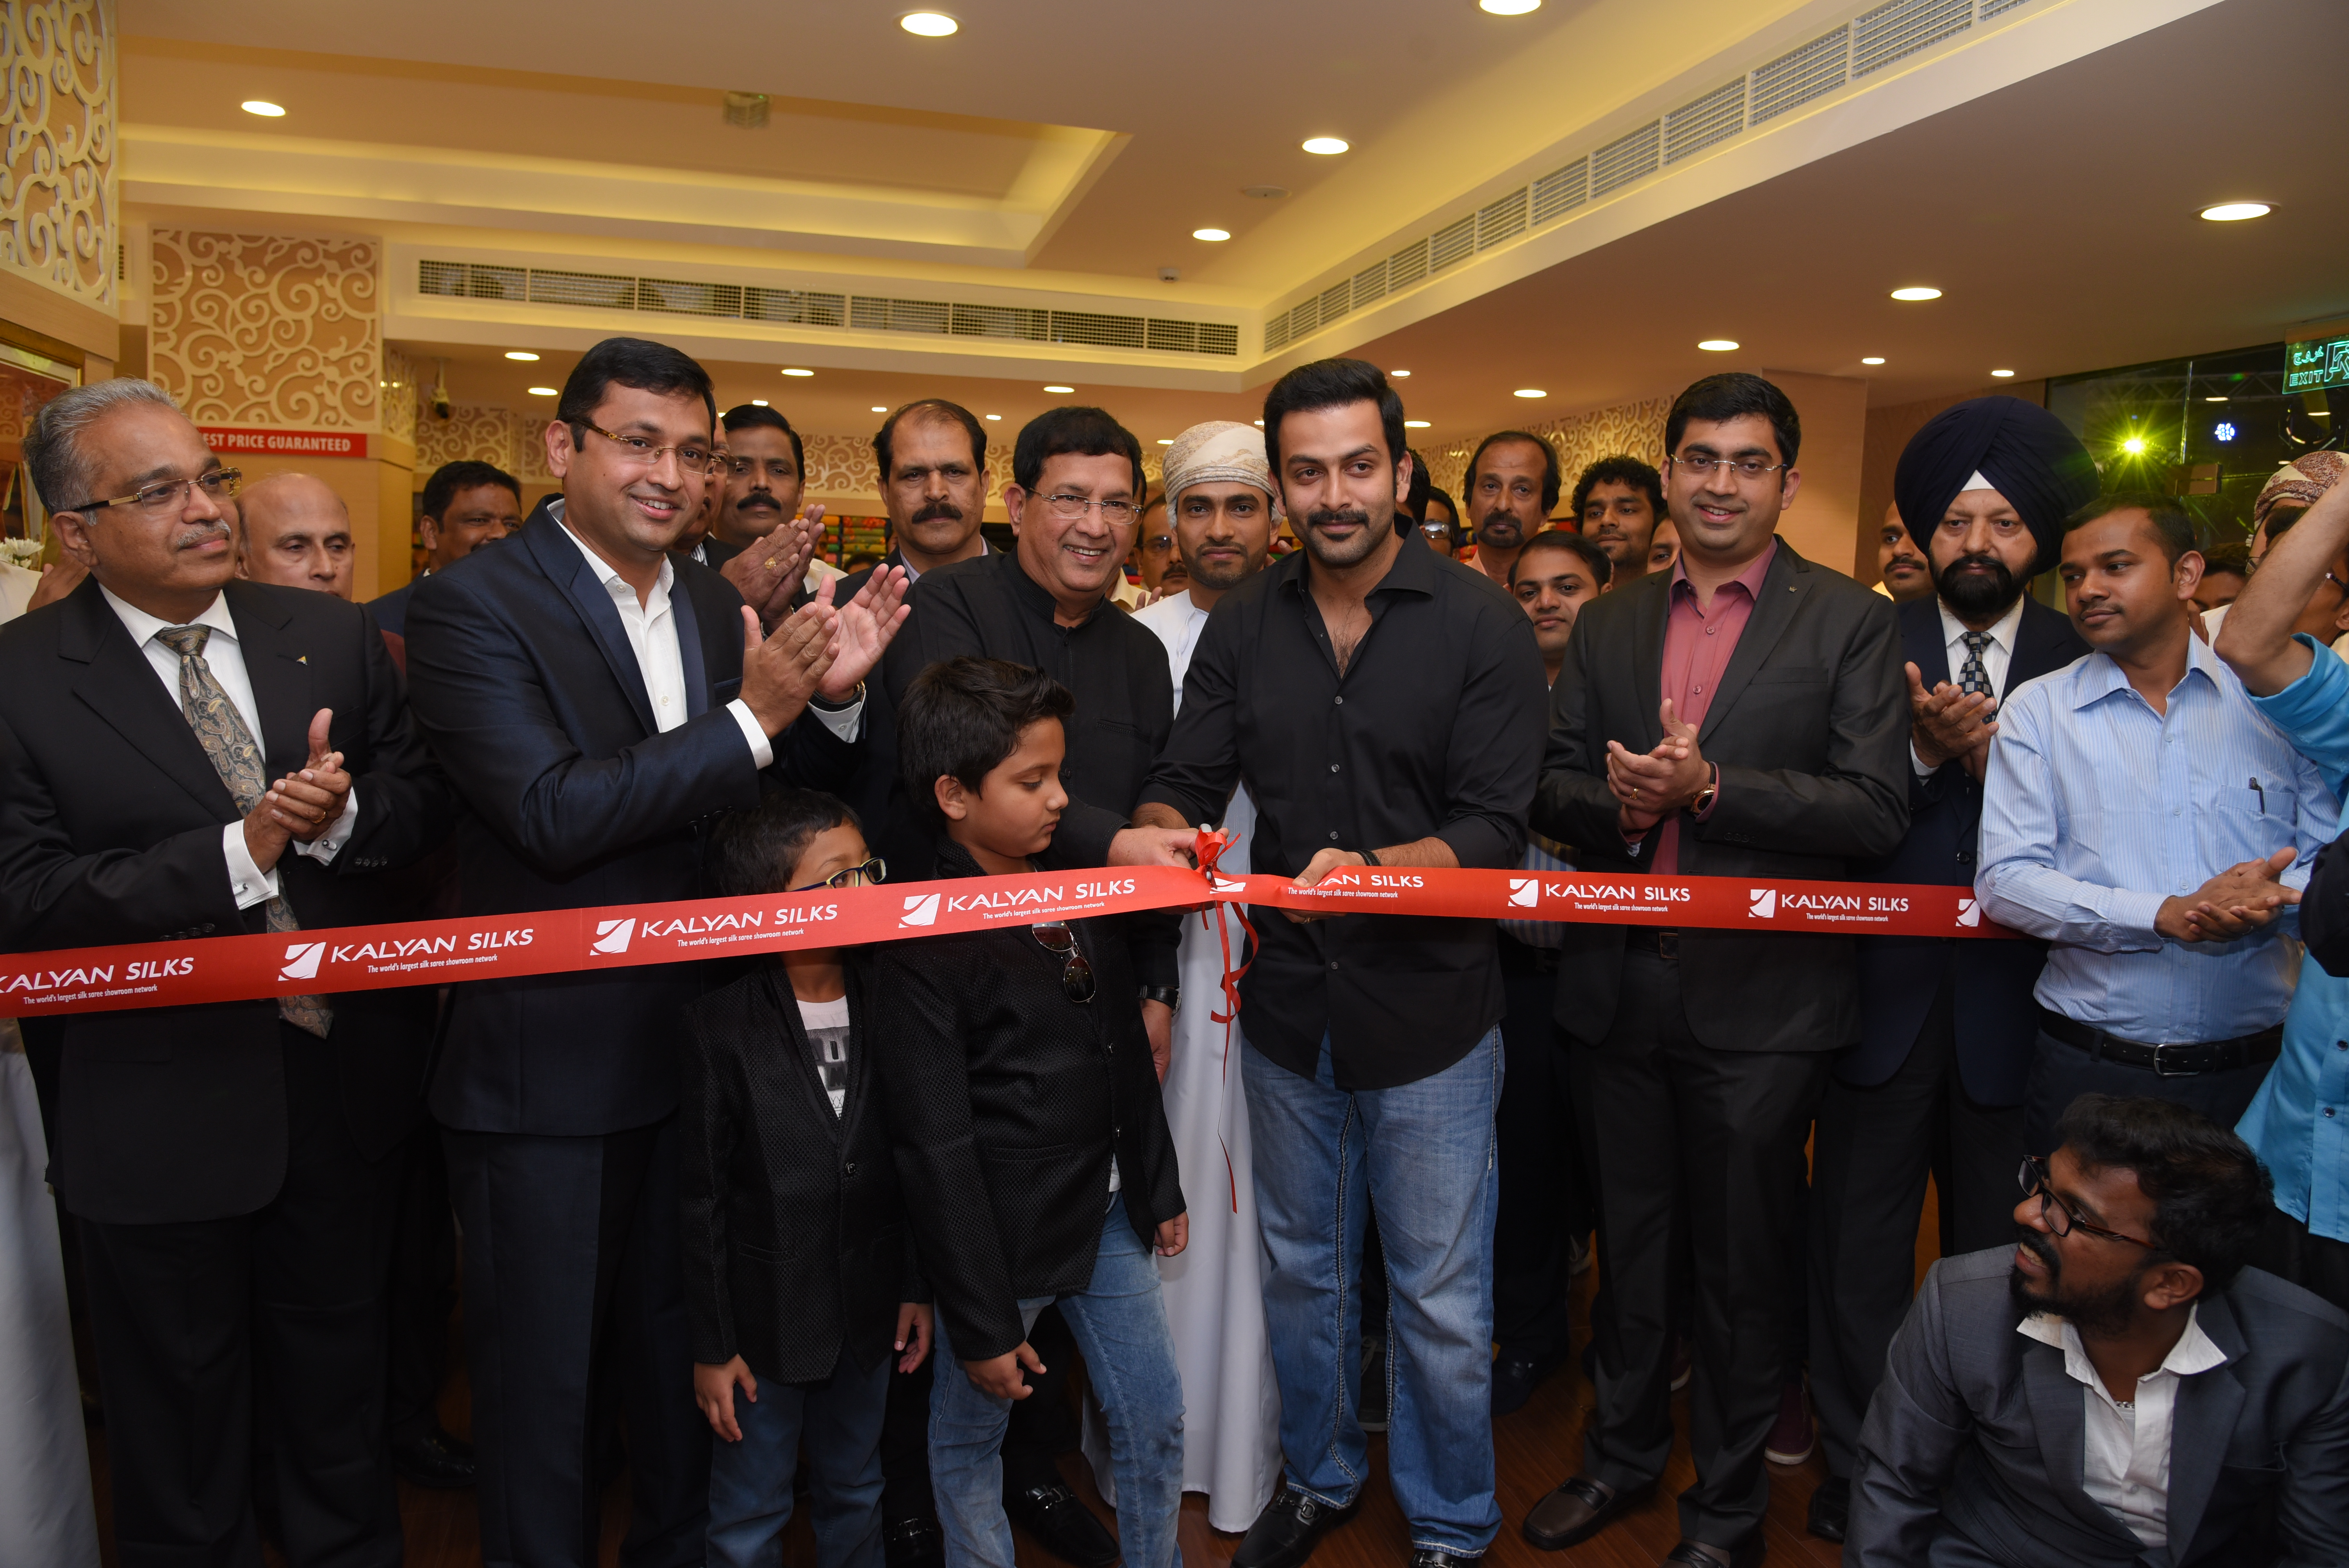 Kalyan Silks opens showroom in Muscat